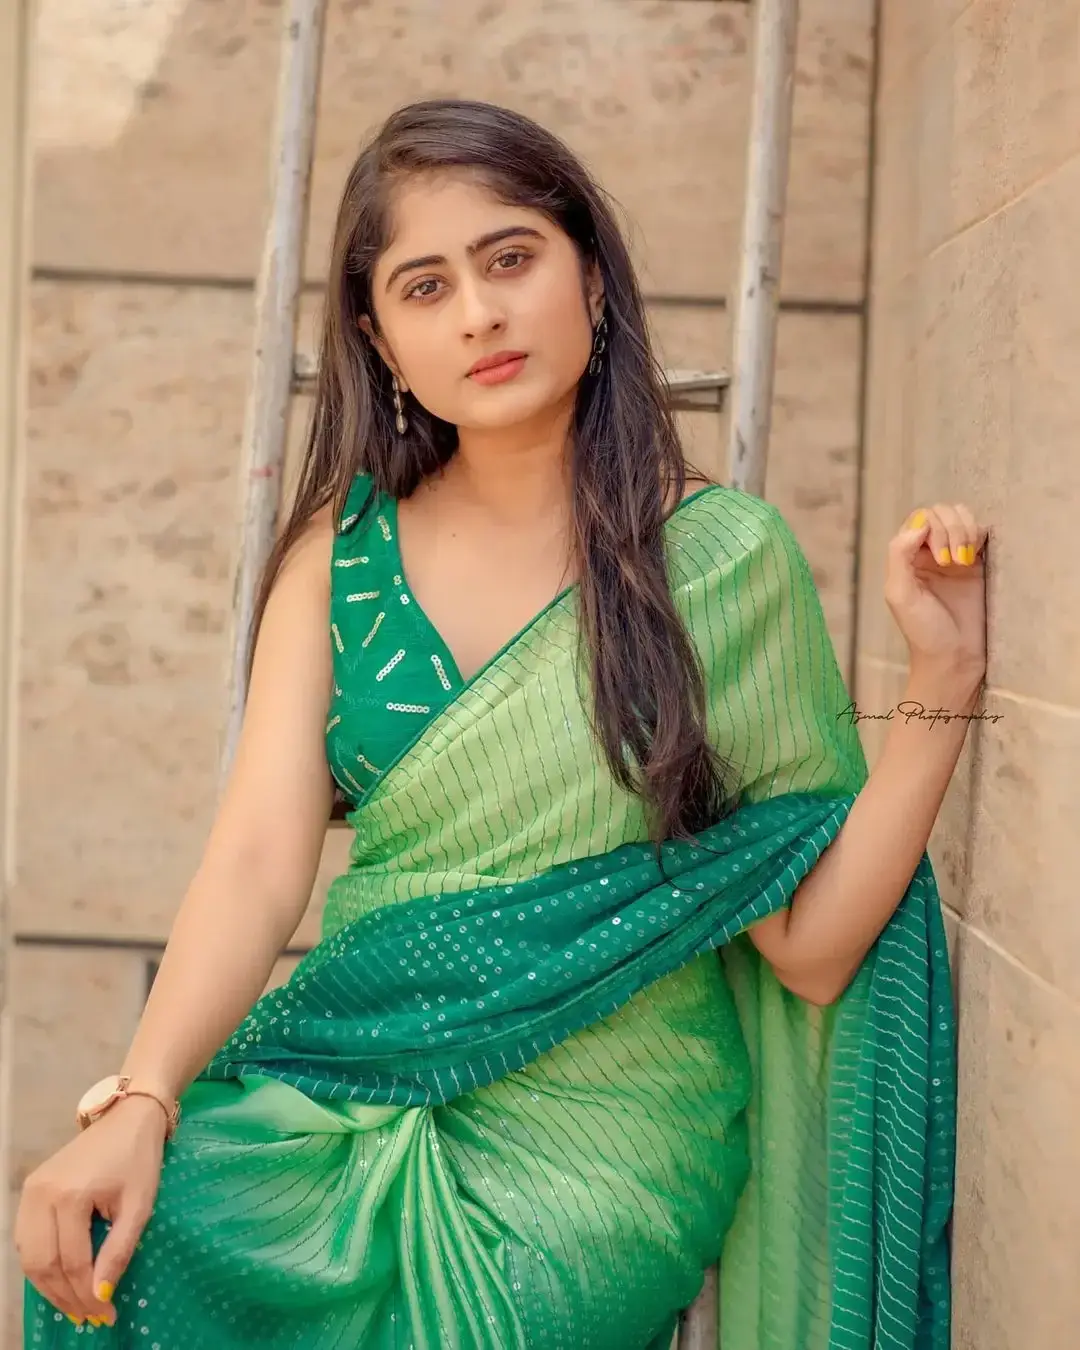 INDIAN TV ACTRESS KRISHNA PRIYA NAIR IMAGES IN GREEN SAREE 1